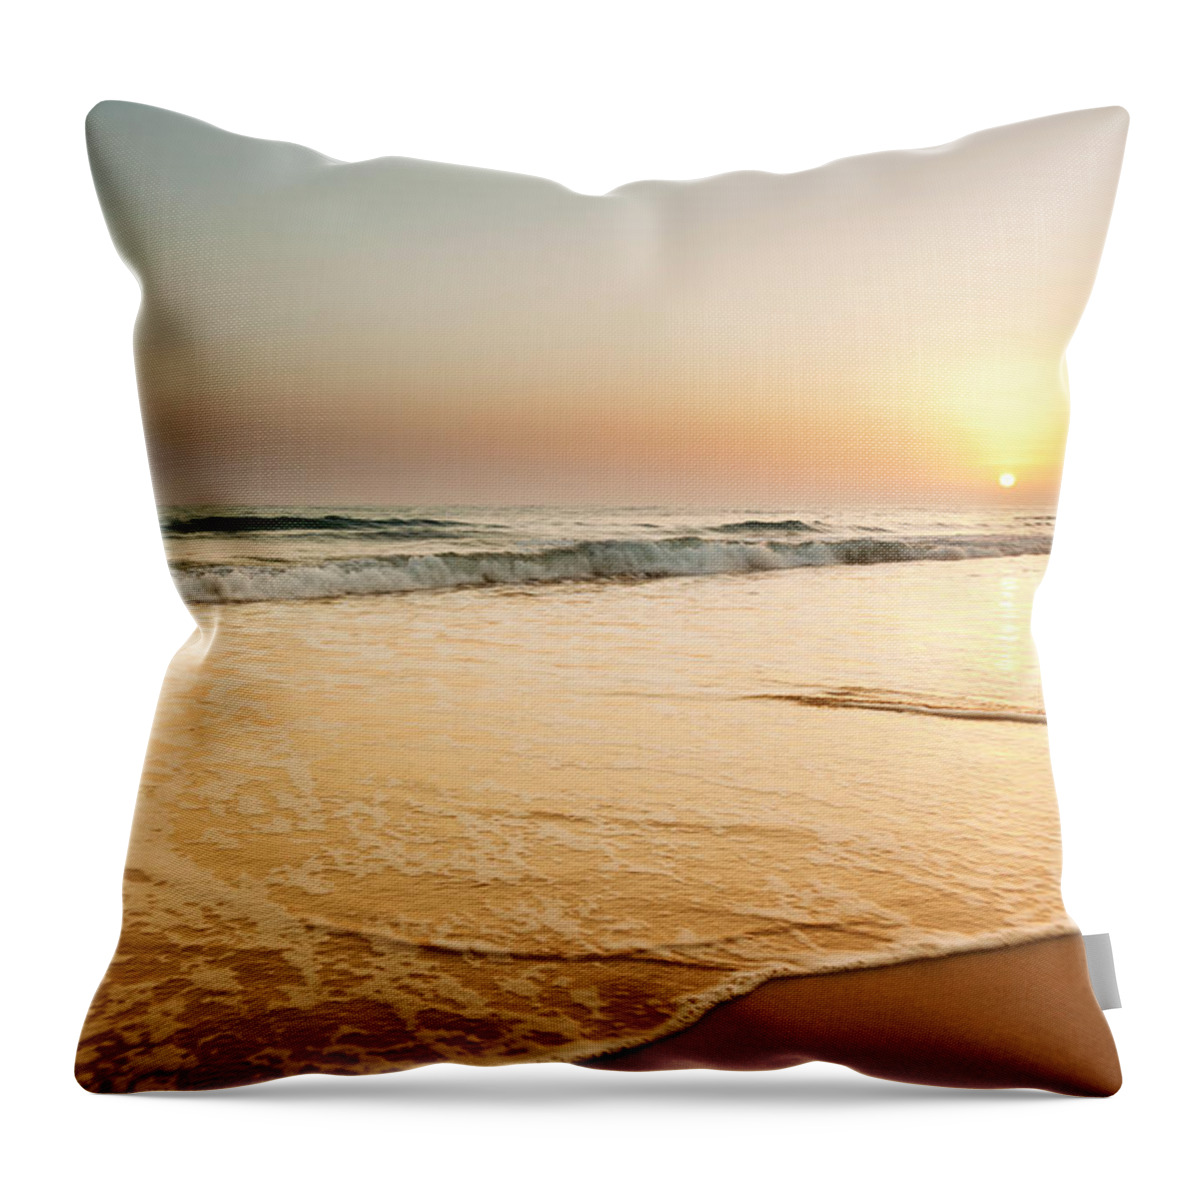 Water's Edge Throw Pillow featuring the photograph Ocean Beach Sunset Landscape View by Fernandoah